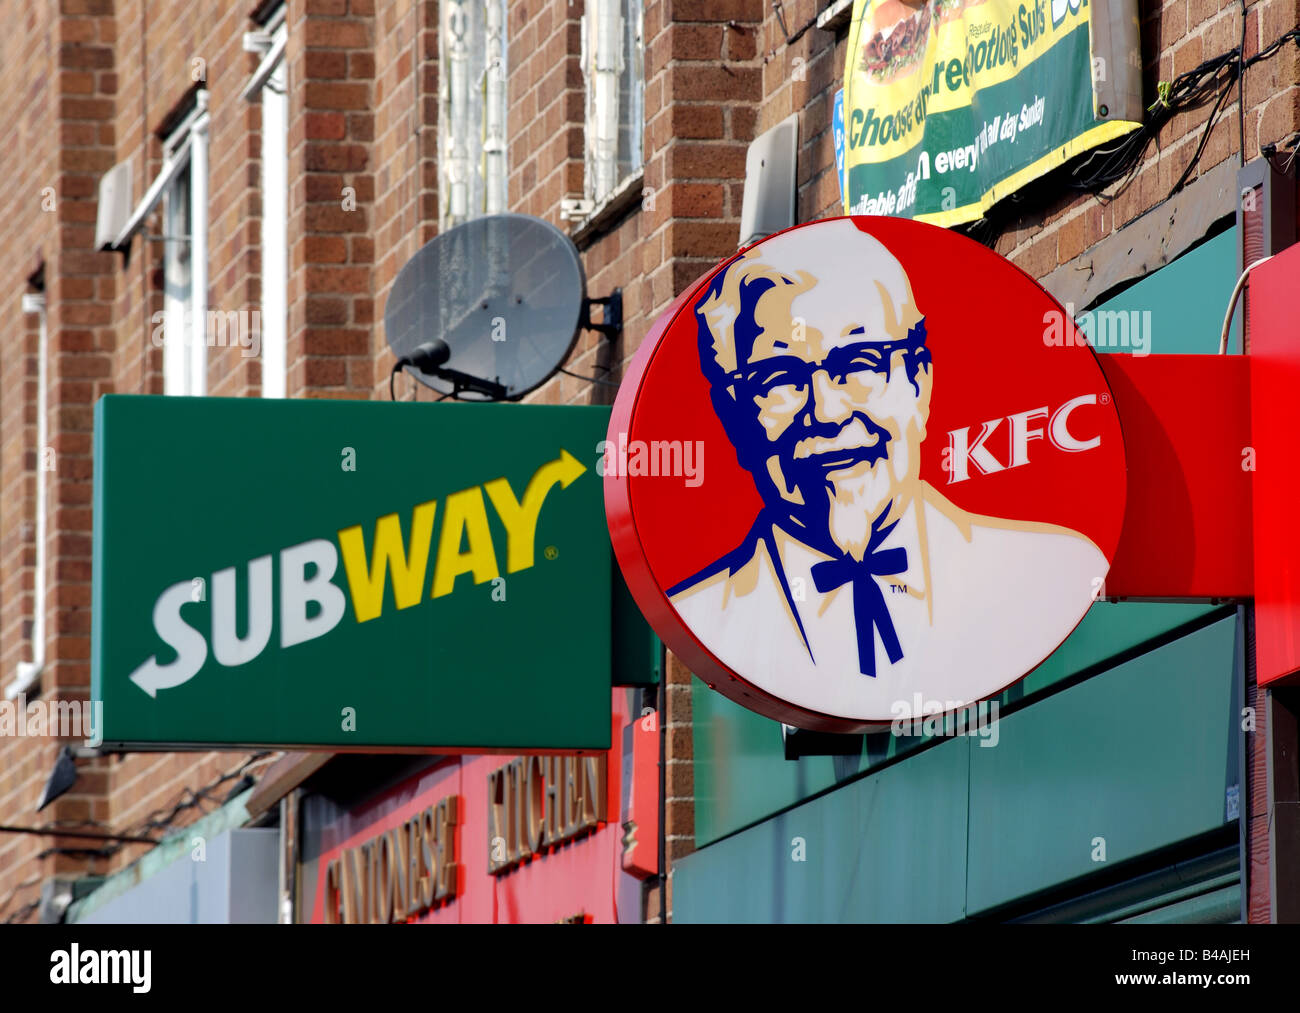 KFC and Subway fast food outlet signs, Sheldon, Birmingham, UK Stock Photo